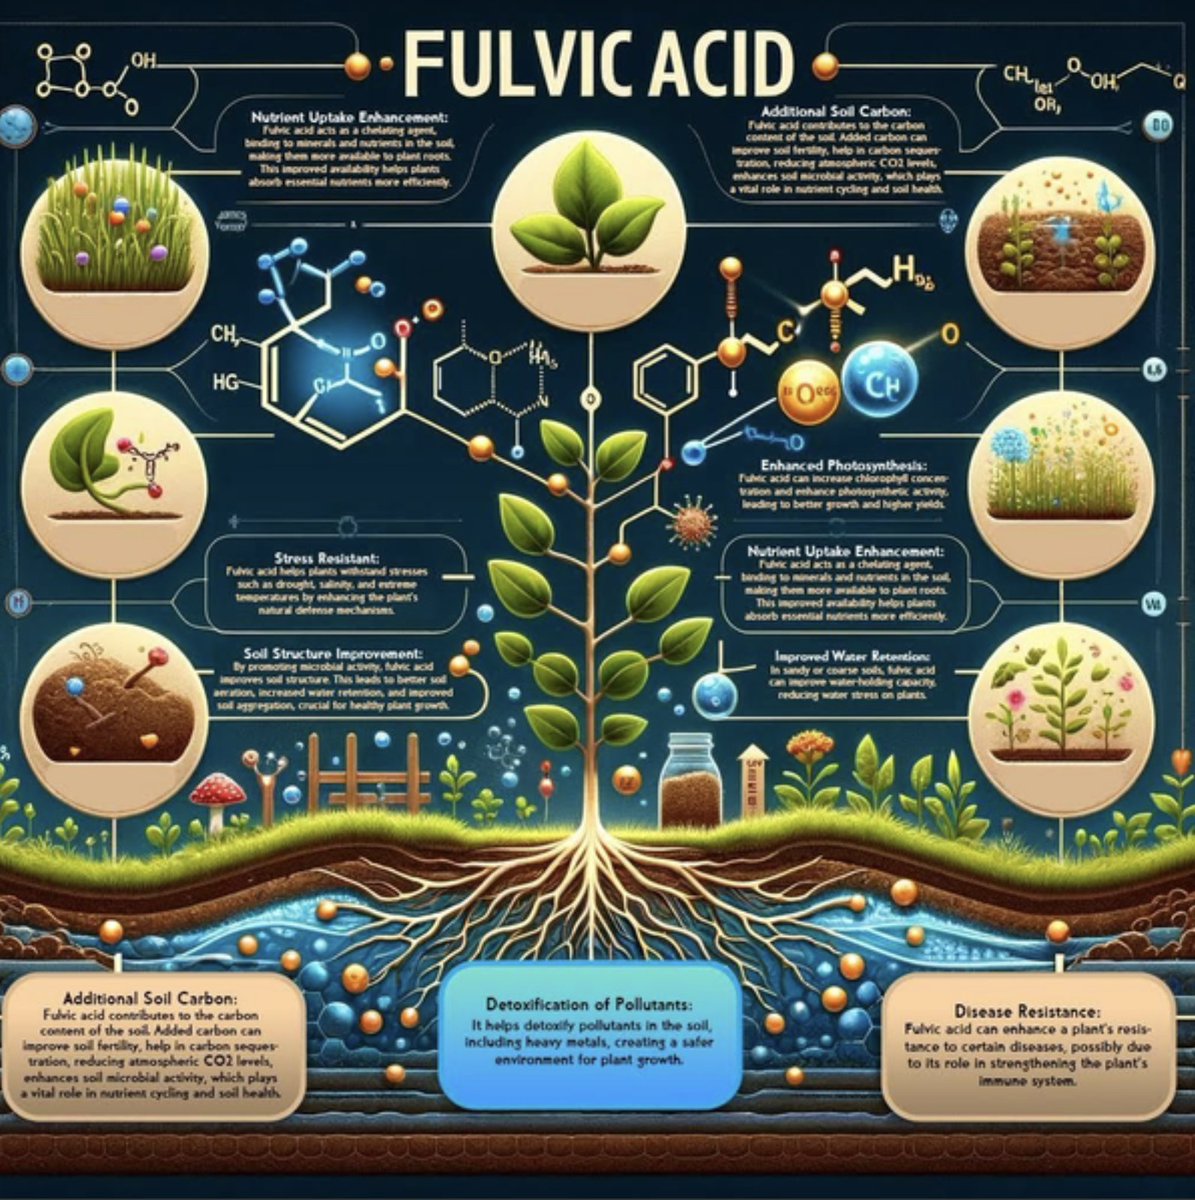 🌱NTS Fulvic Acid Powder™ - Thrive with Fulvic Magic! 

Benefits
- Chelates nutrients 🔄
- Boosts uptake 🌿
- Fosters soil microbes 🦠
- Enhances mineral availability 🪨
- Elevates yield 🌾

Explore more: 📥🌐 newgenagri.com/product/nts-fu…

#FulvicMagic #CropThriving 🚜🌱